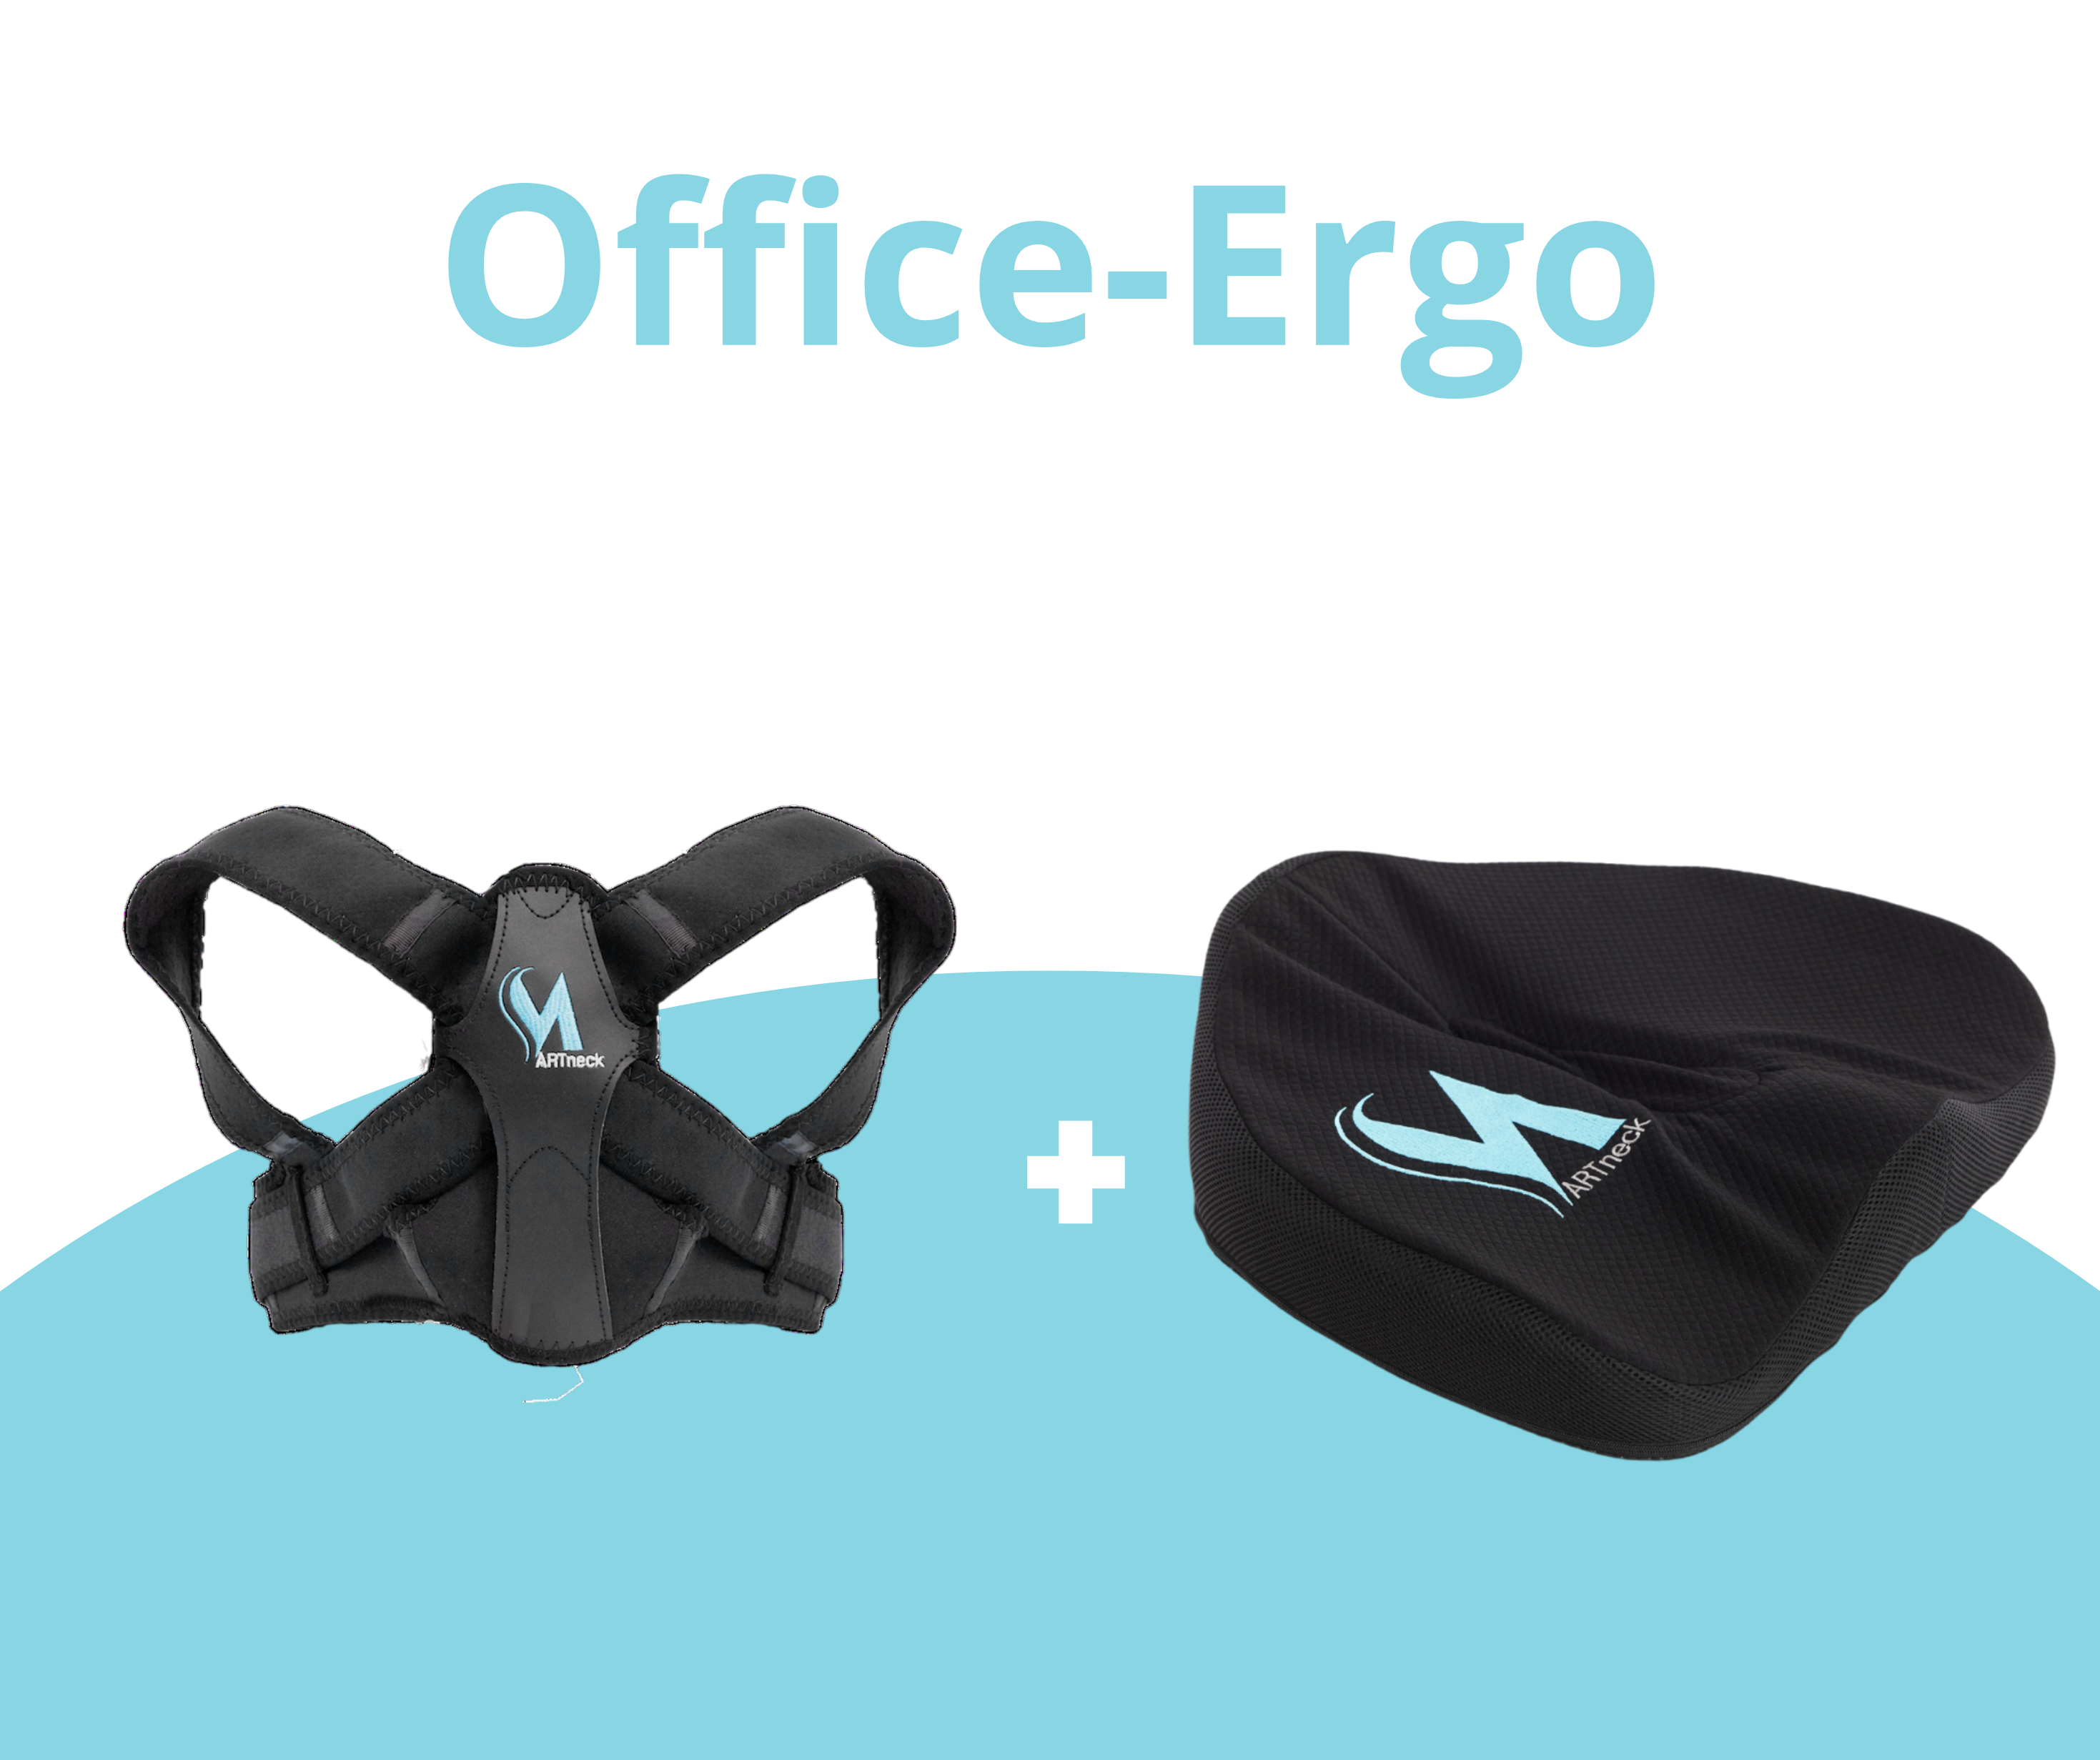 Office-Ergo